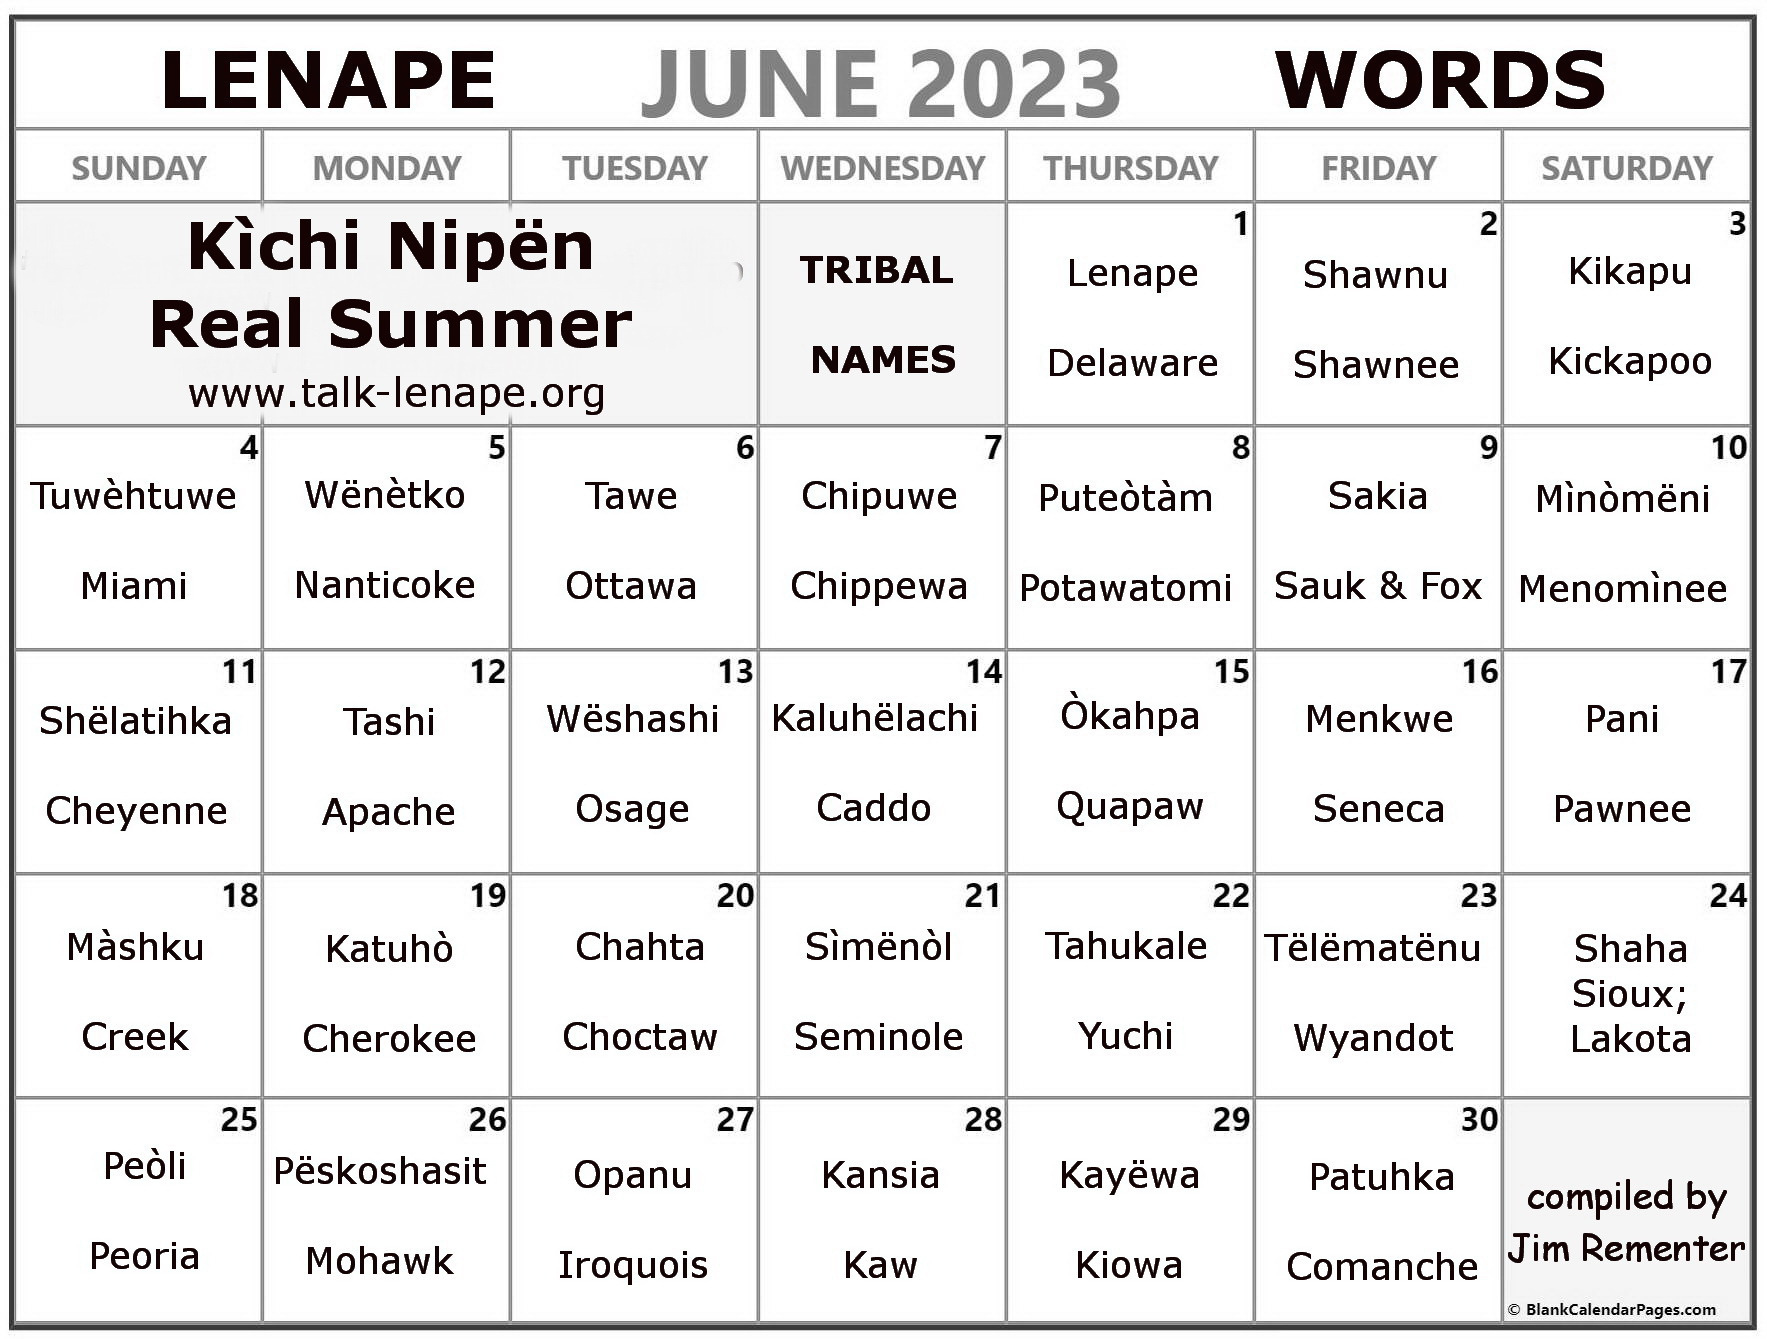 June 2023 Lenape Word-a-Day Calendar